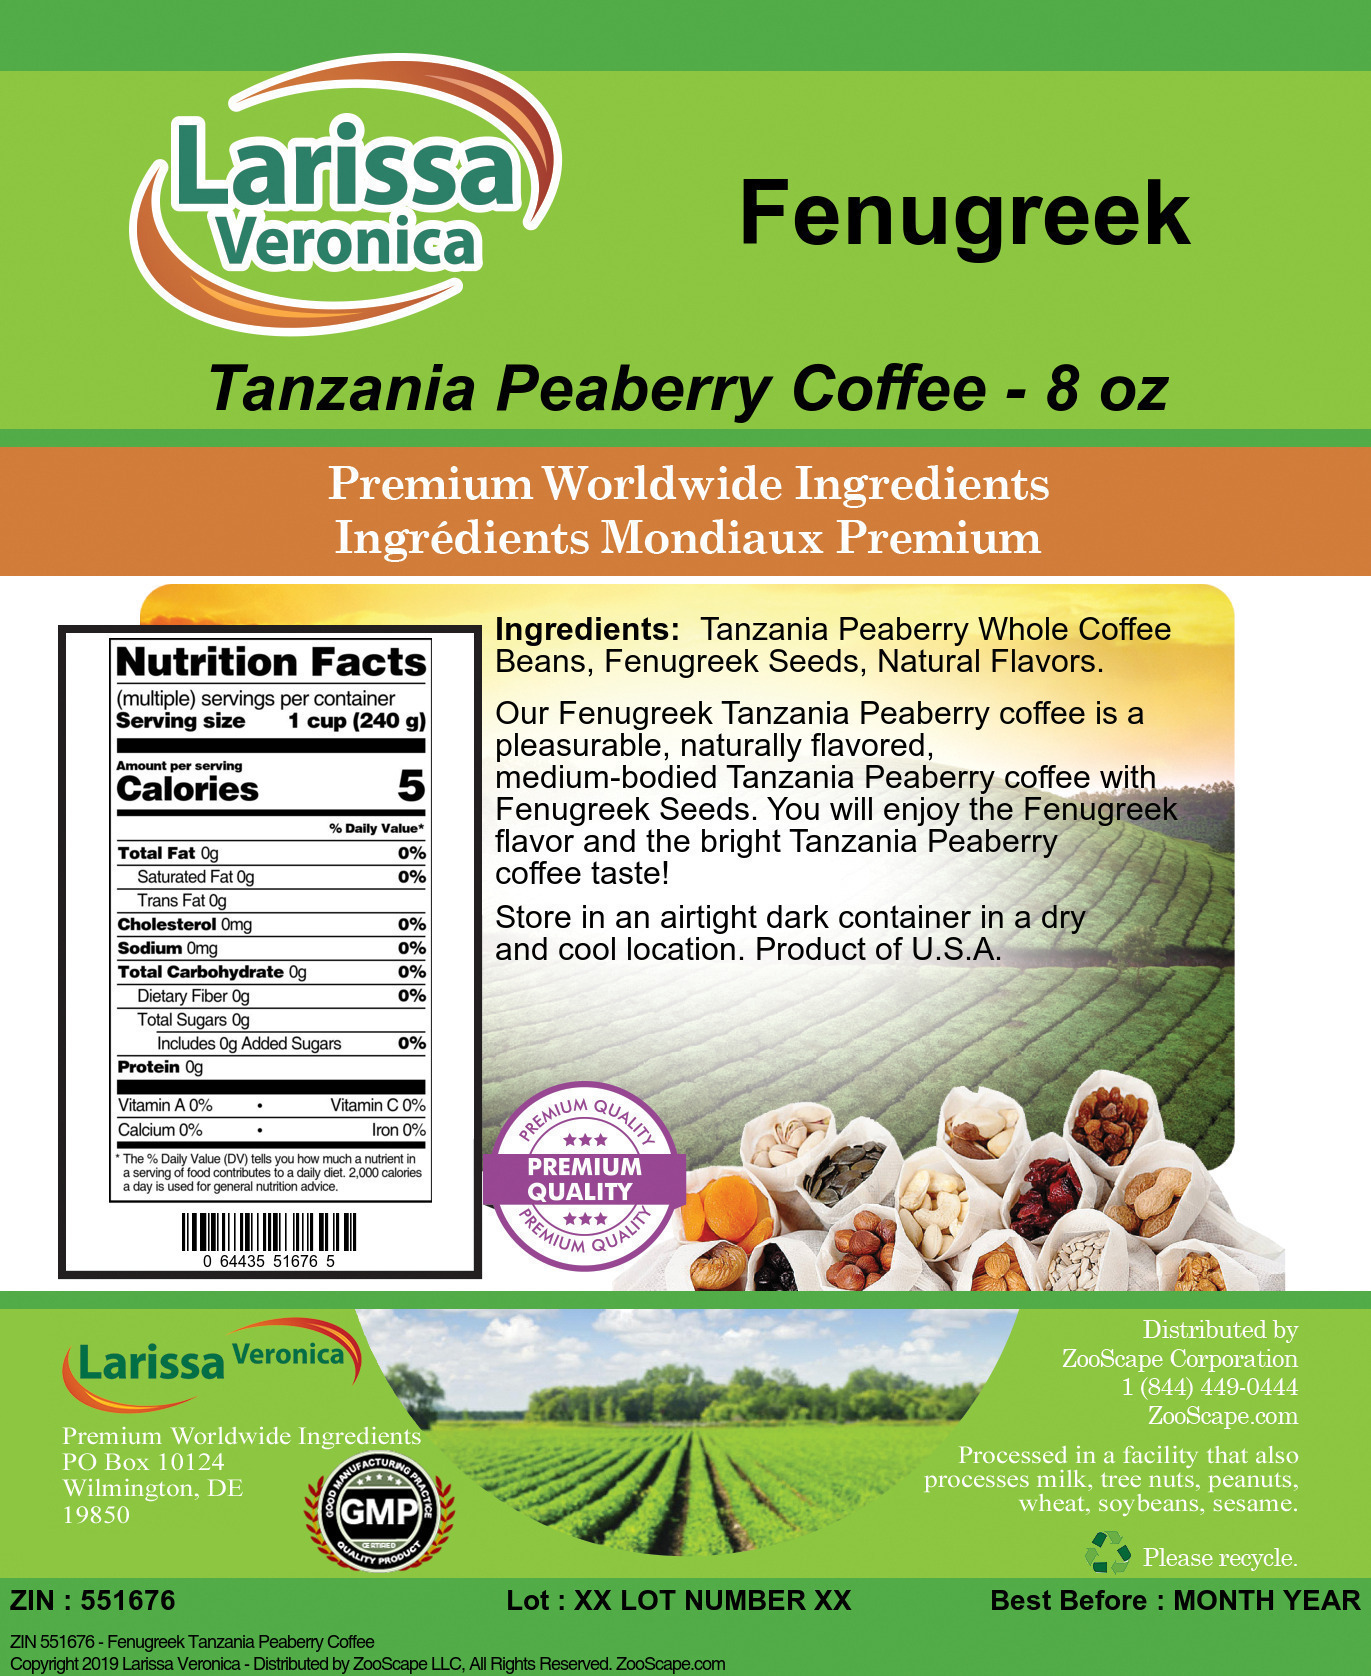 Fenugreek Tanzania Peaberry Coffee - Label